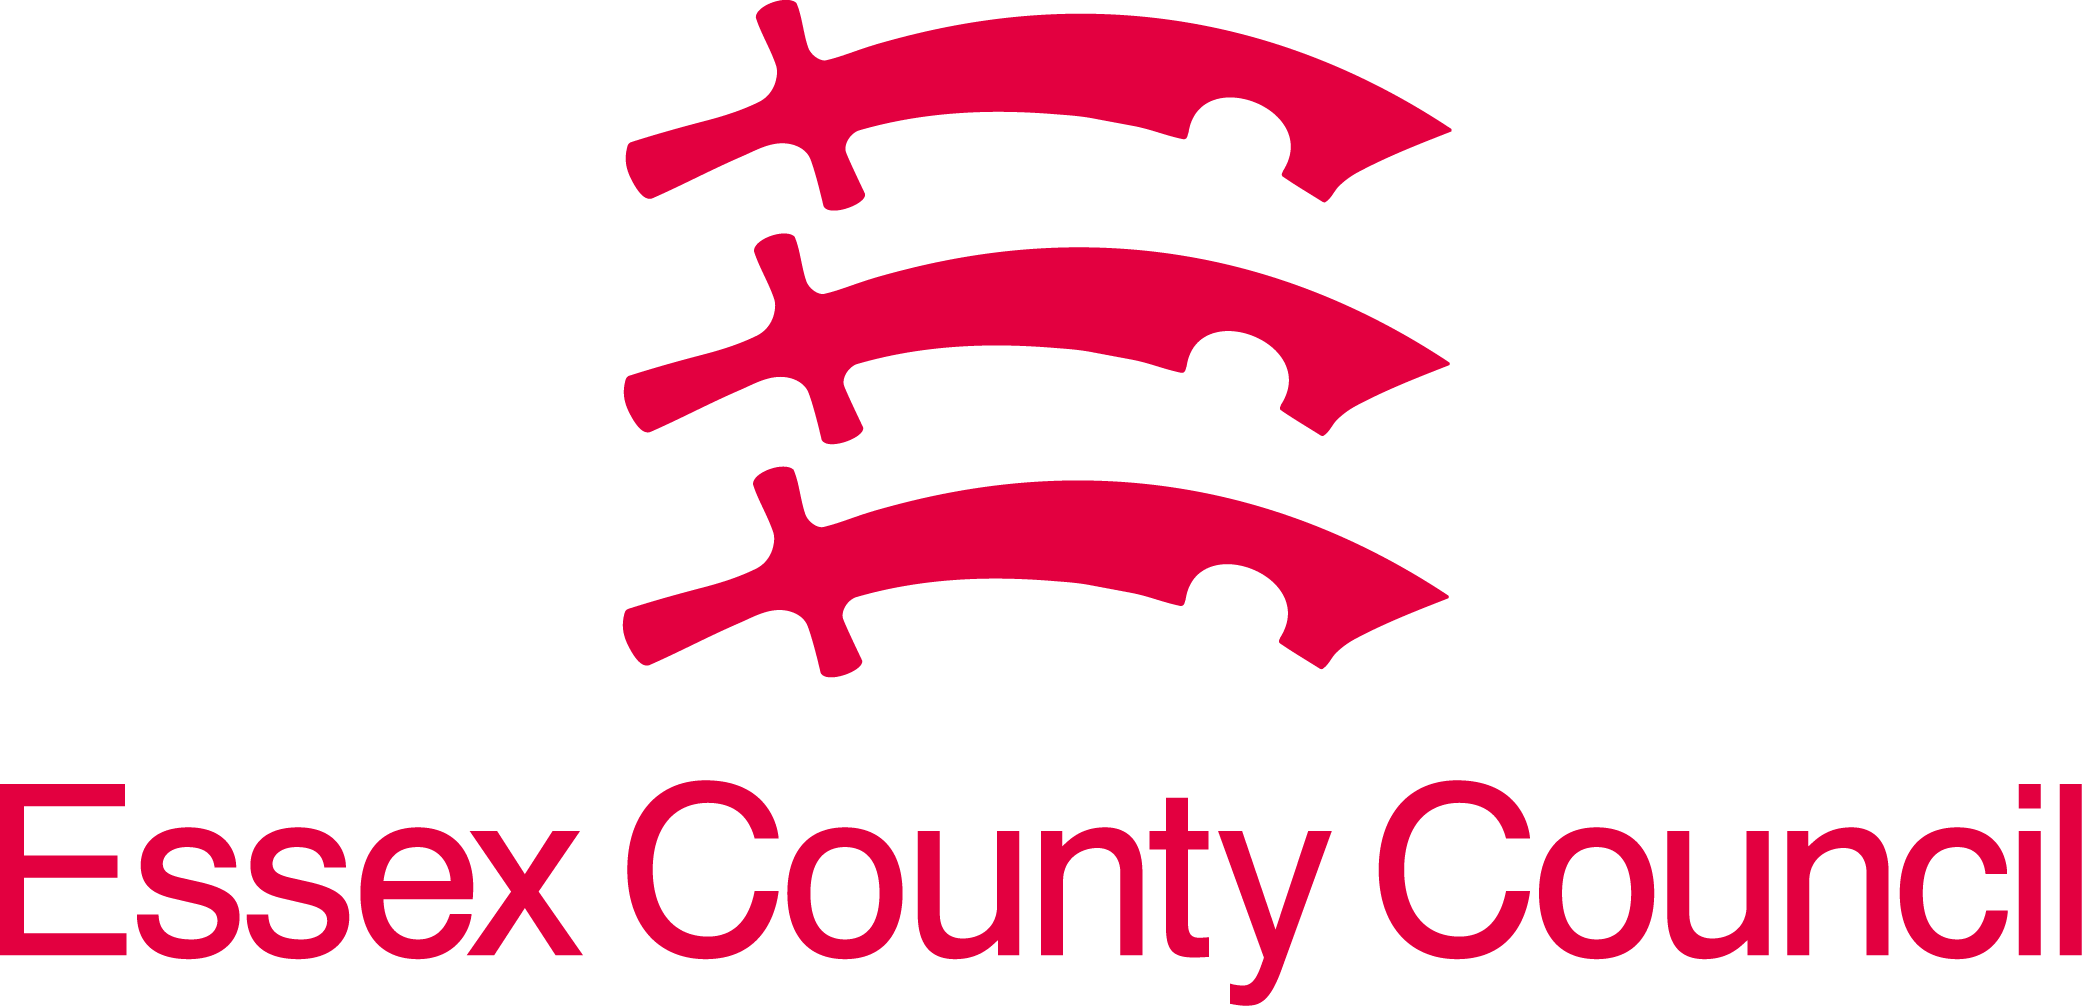 Essex County Council - Provider Hub